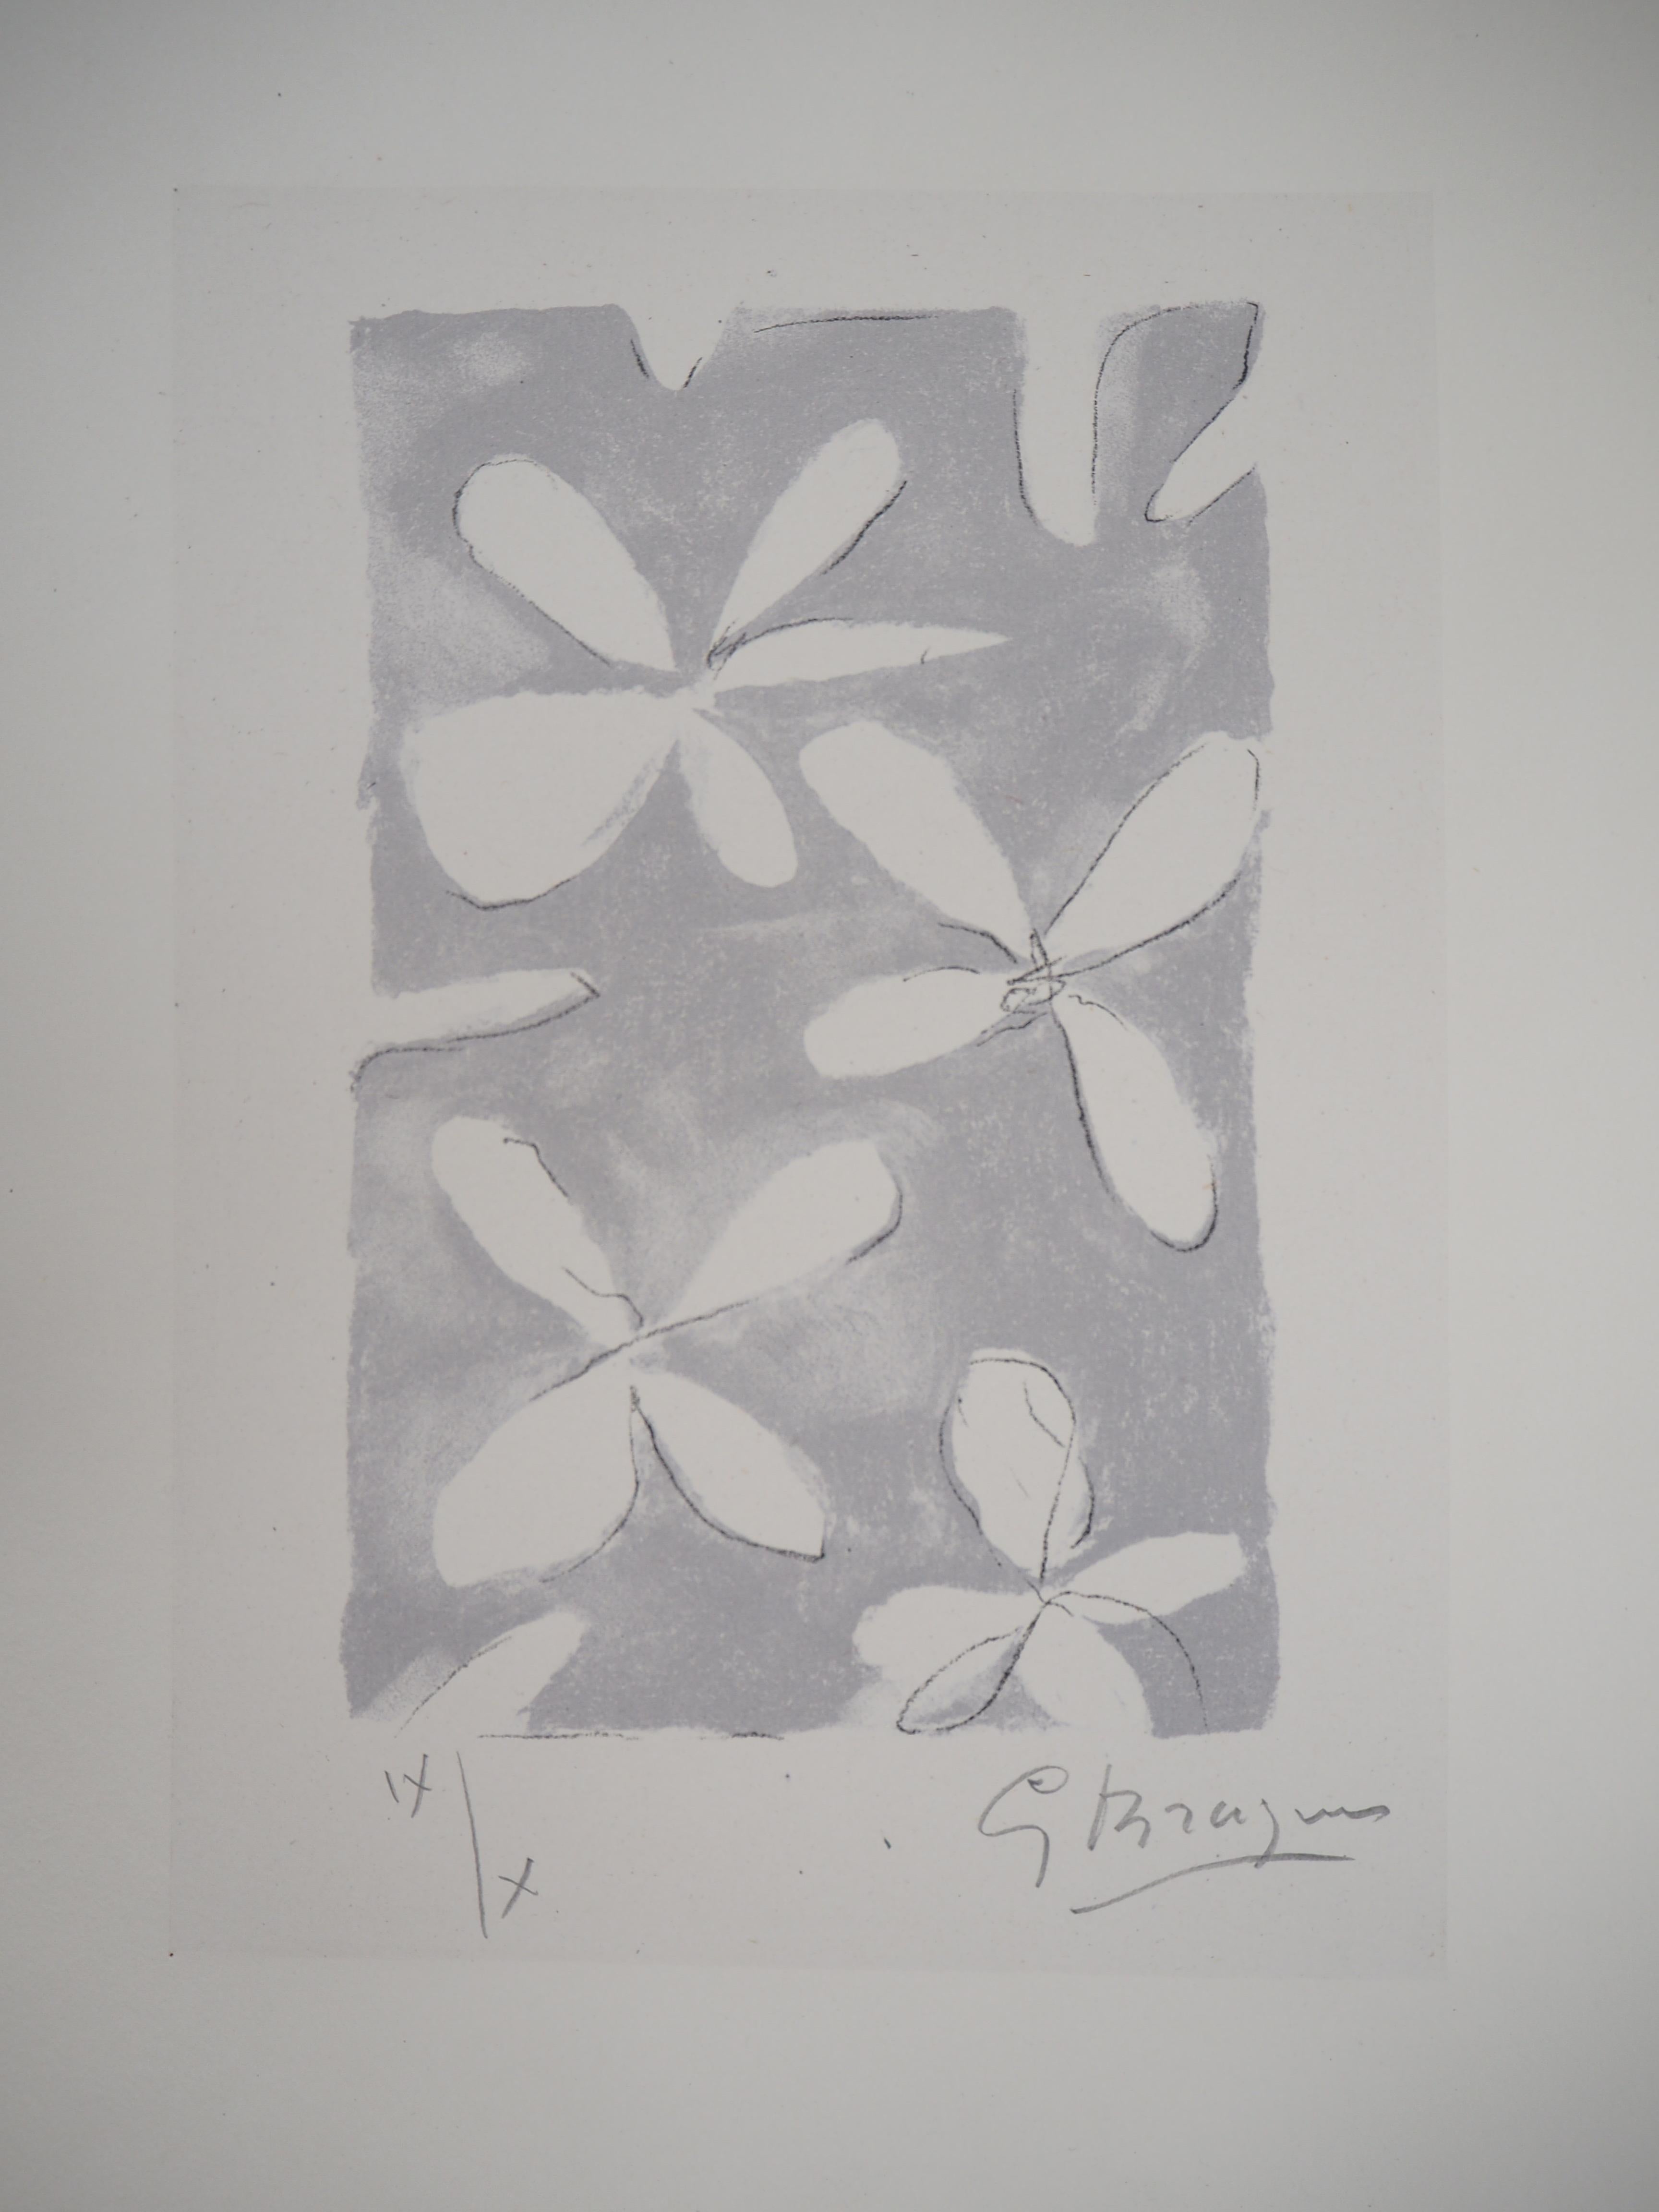 Flower Pattern - Original lithograph, Handsigned, Ltd / 10 - Mourlot #88 - Print by Georges Braque